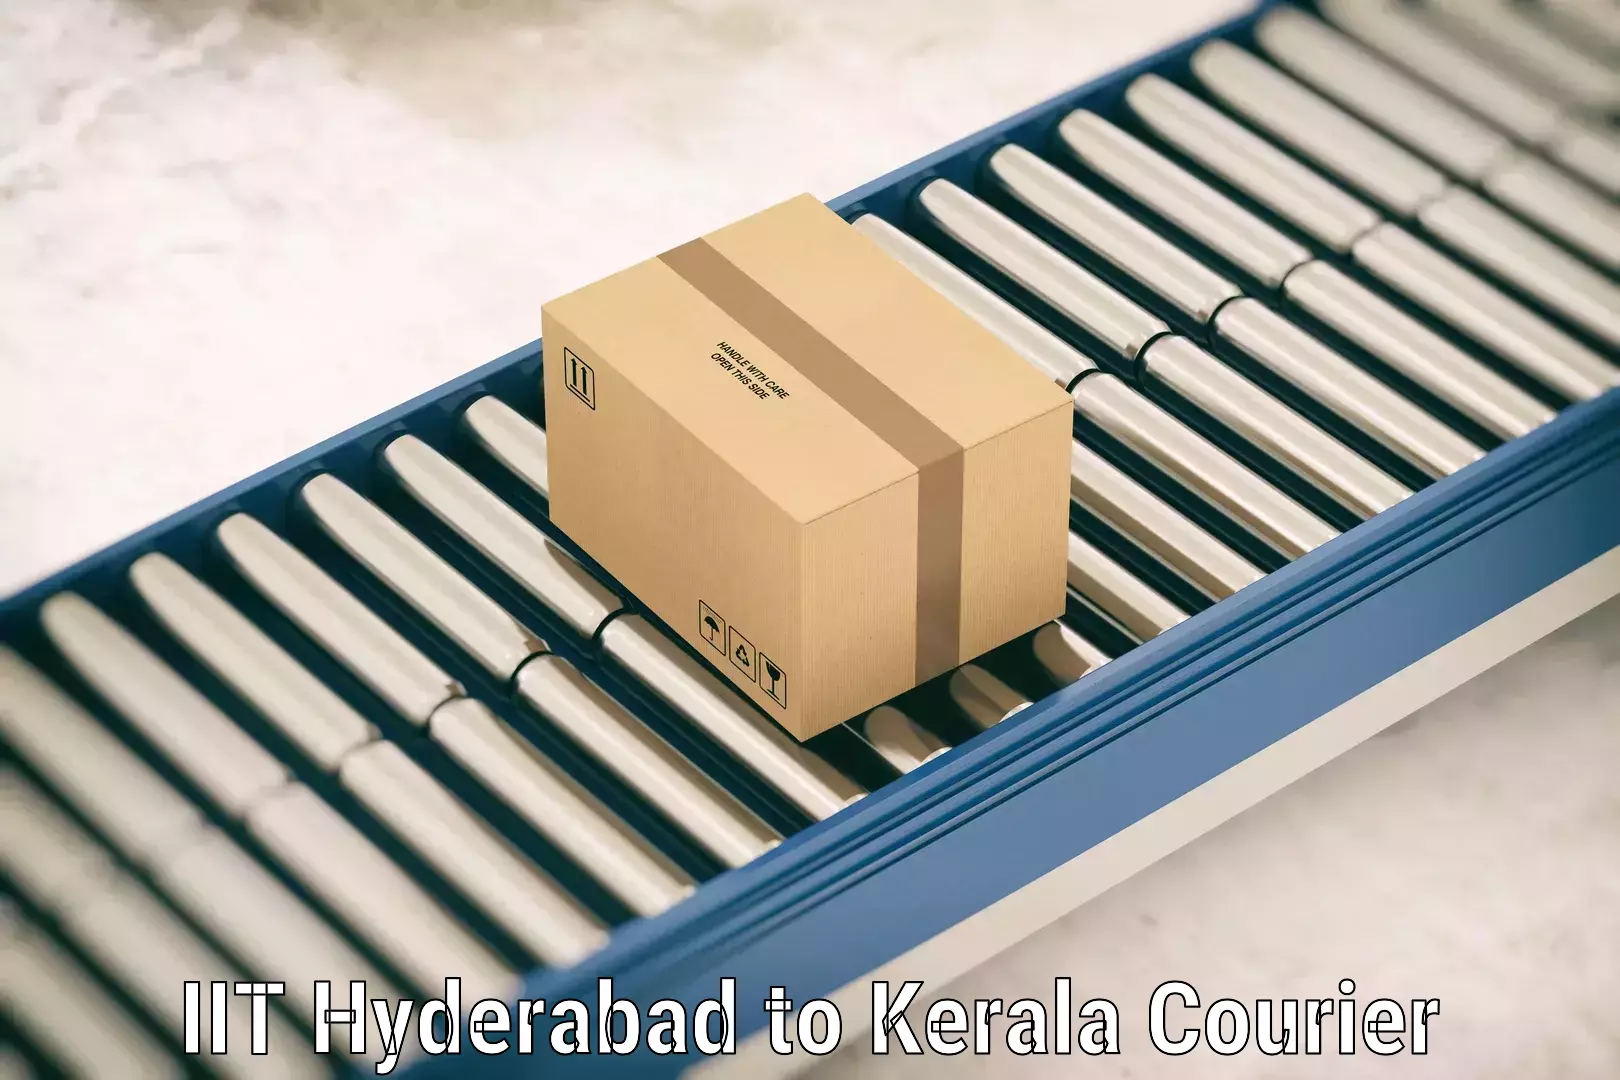 Luggage transport company IIT Hyderabad to Kerala